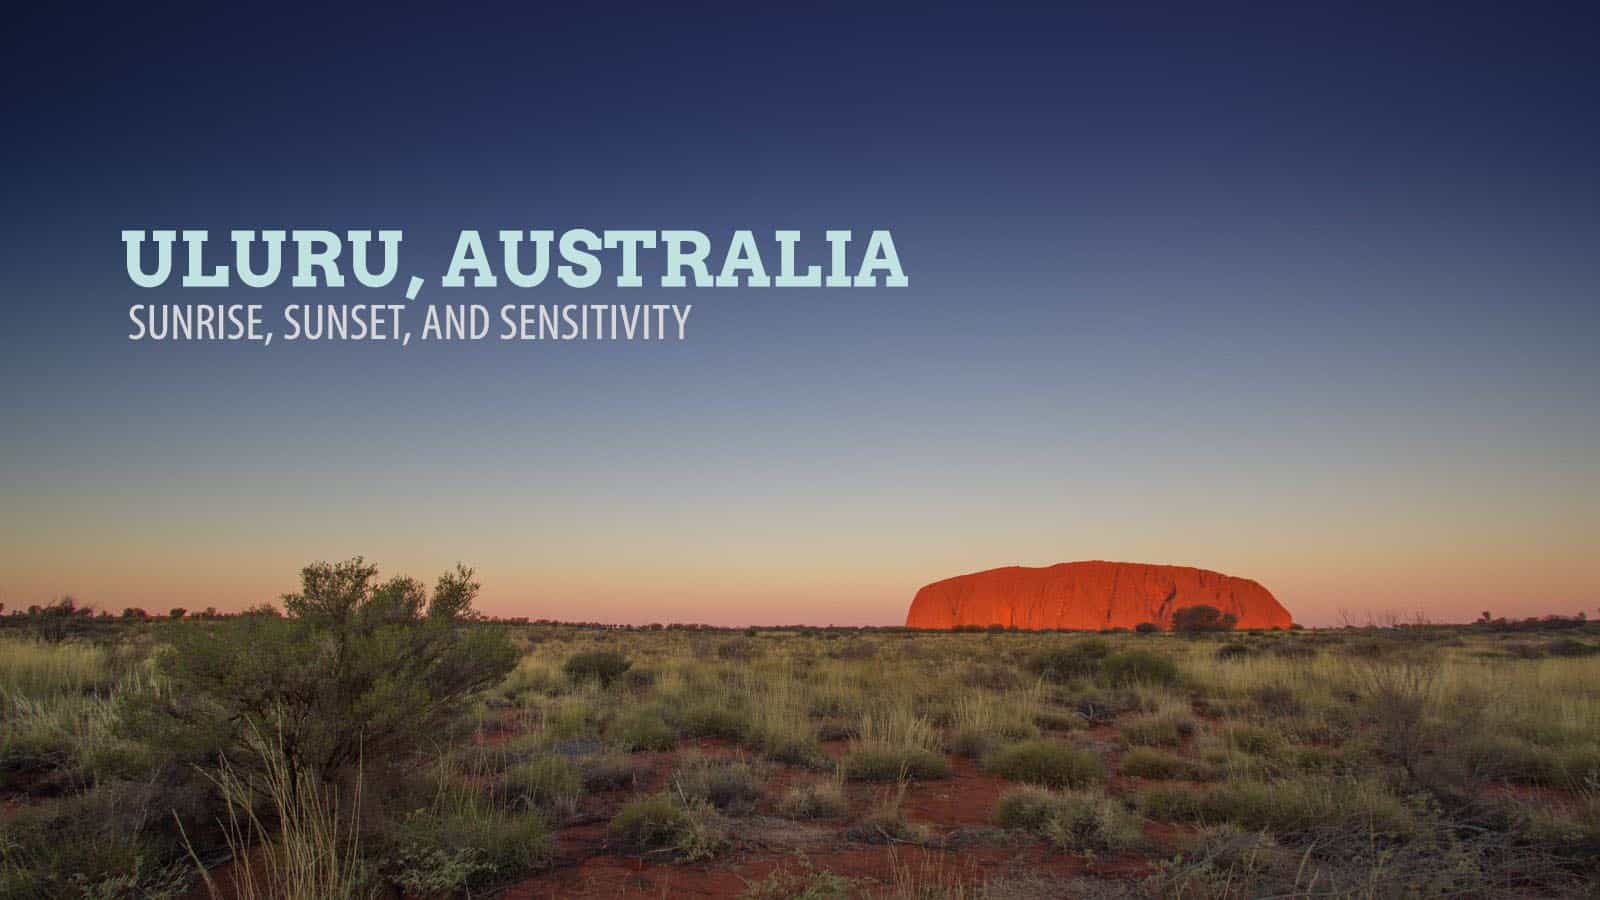 Uluru, Australia: Sunset, Sunrise and Sensitivity